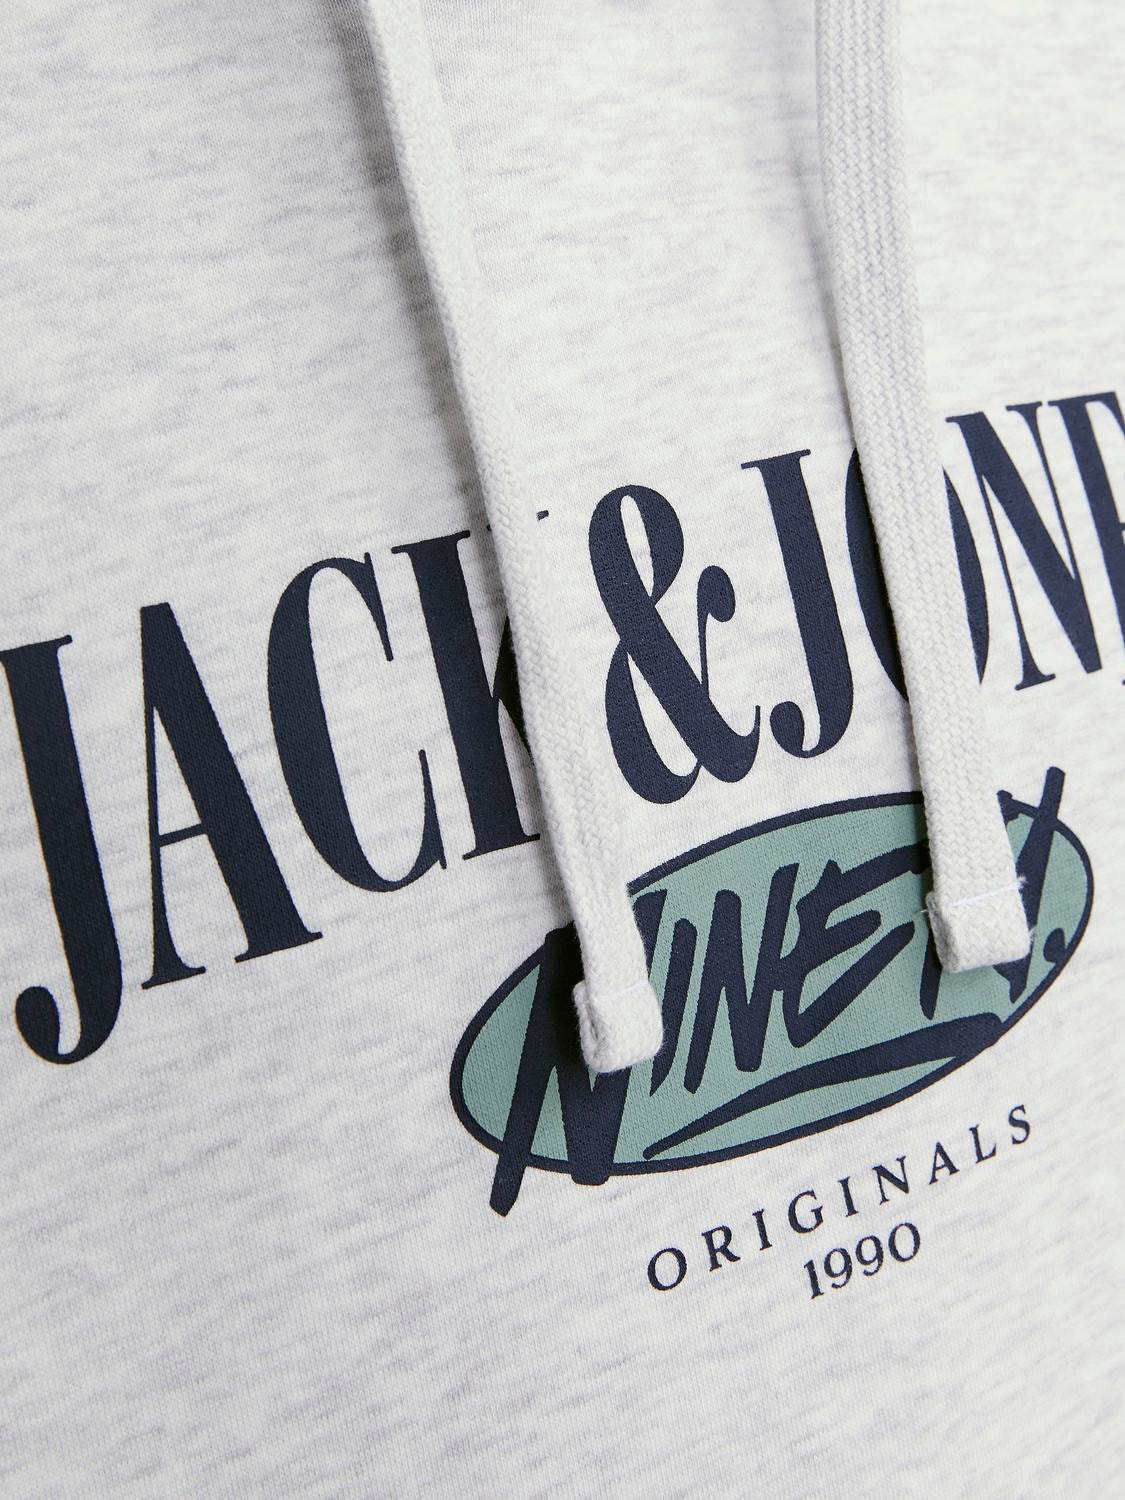 Jack & Jones Sudadera con capucha Logotipo -White Melange - 12252402